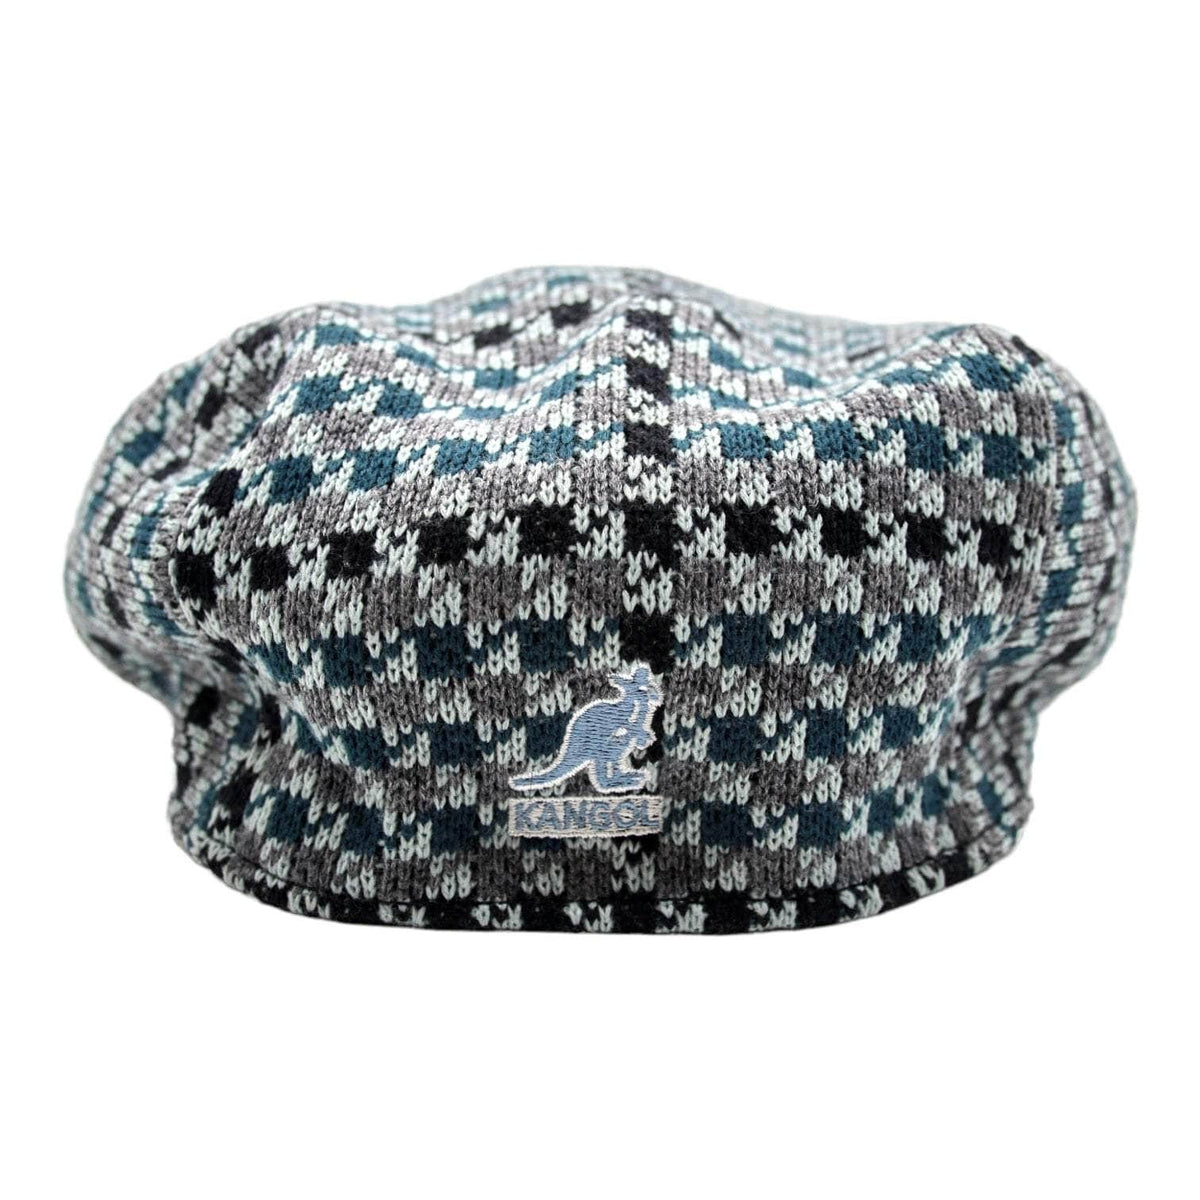 Kangol Blue Tweed Jacquard Knitted Flatcap